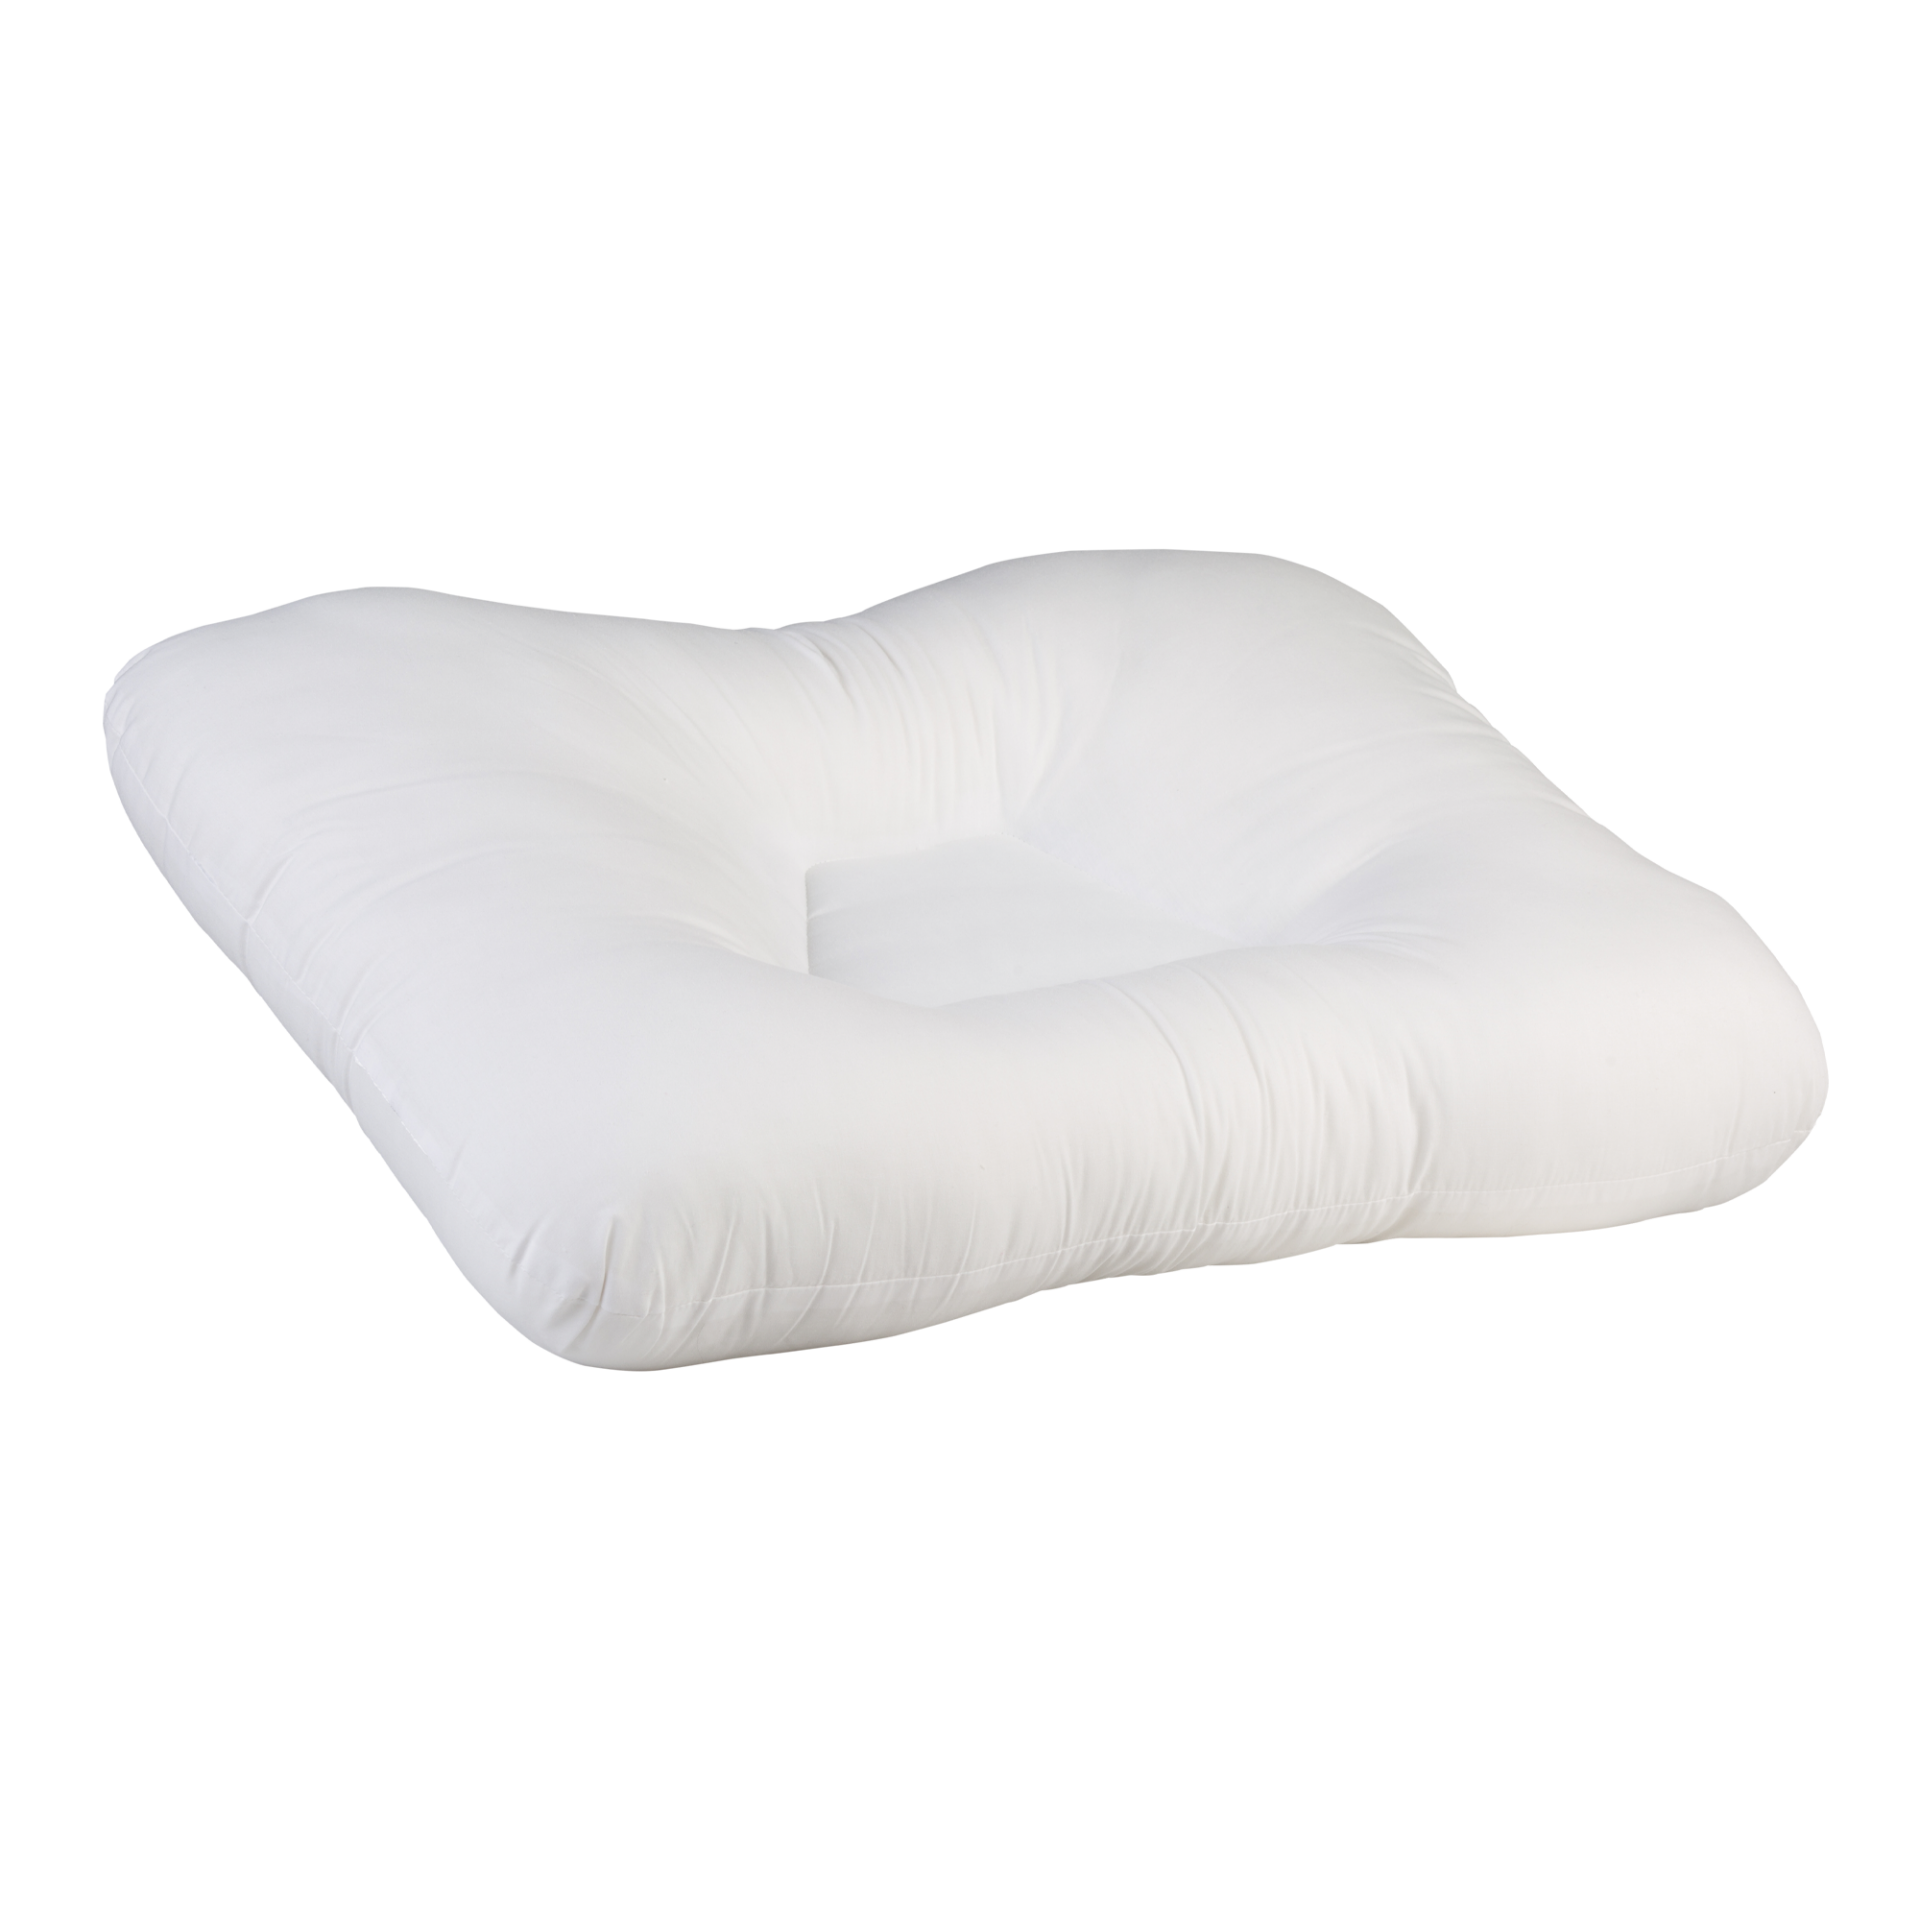 Flat Seat Cushion, Memory Foam Support Pillows